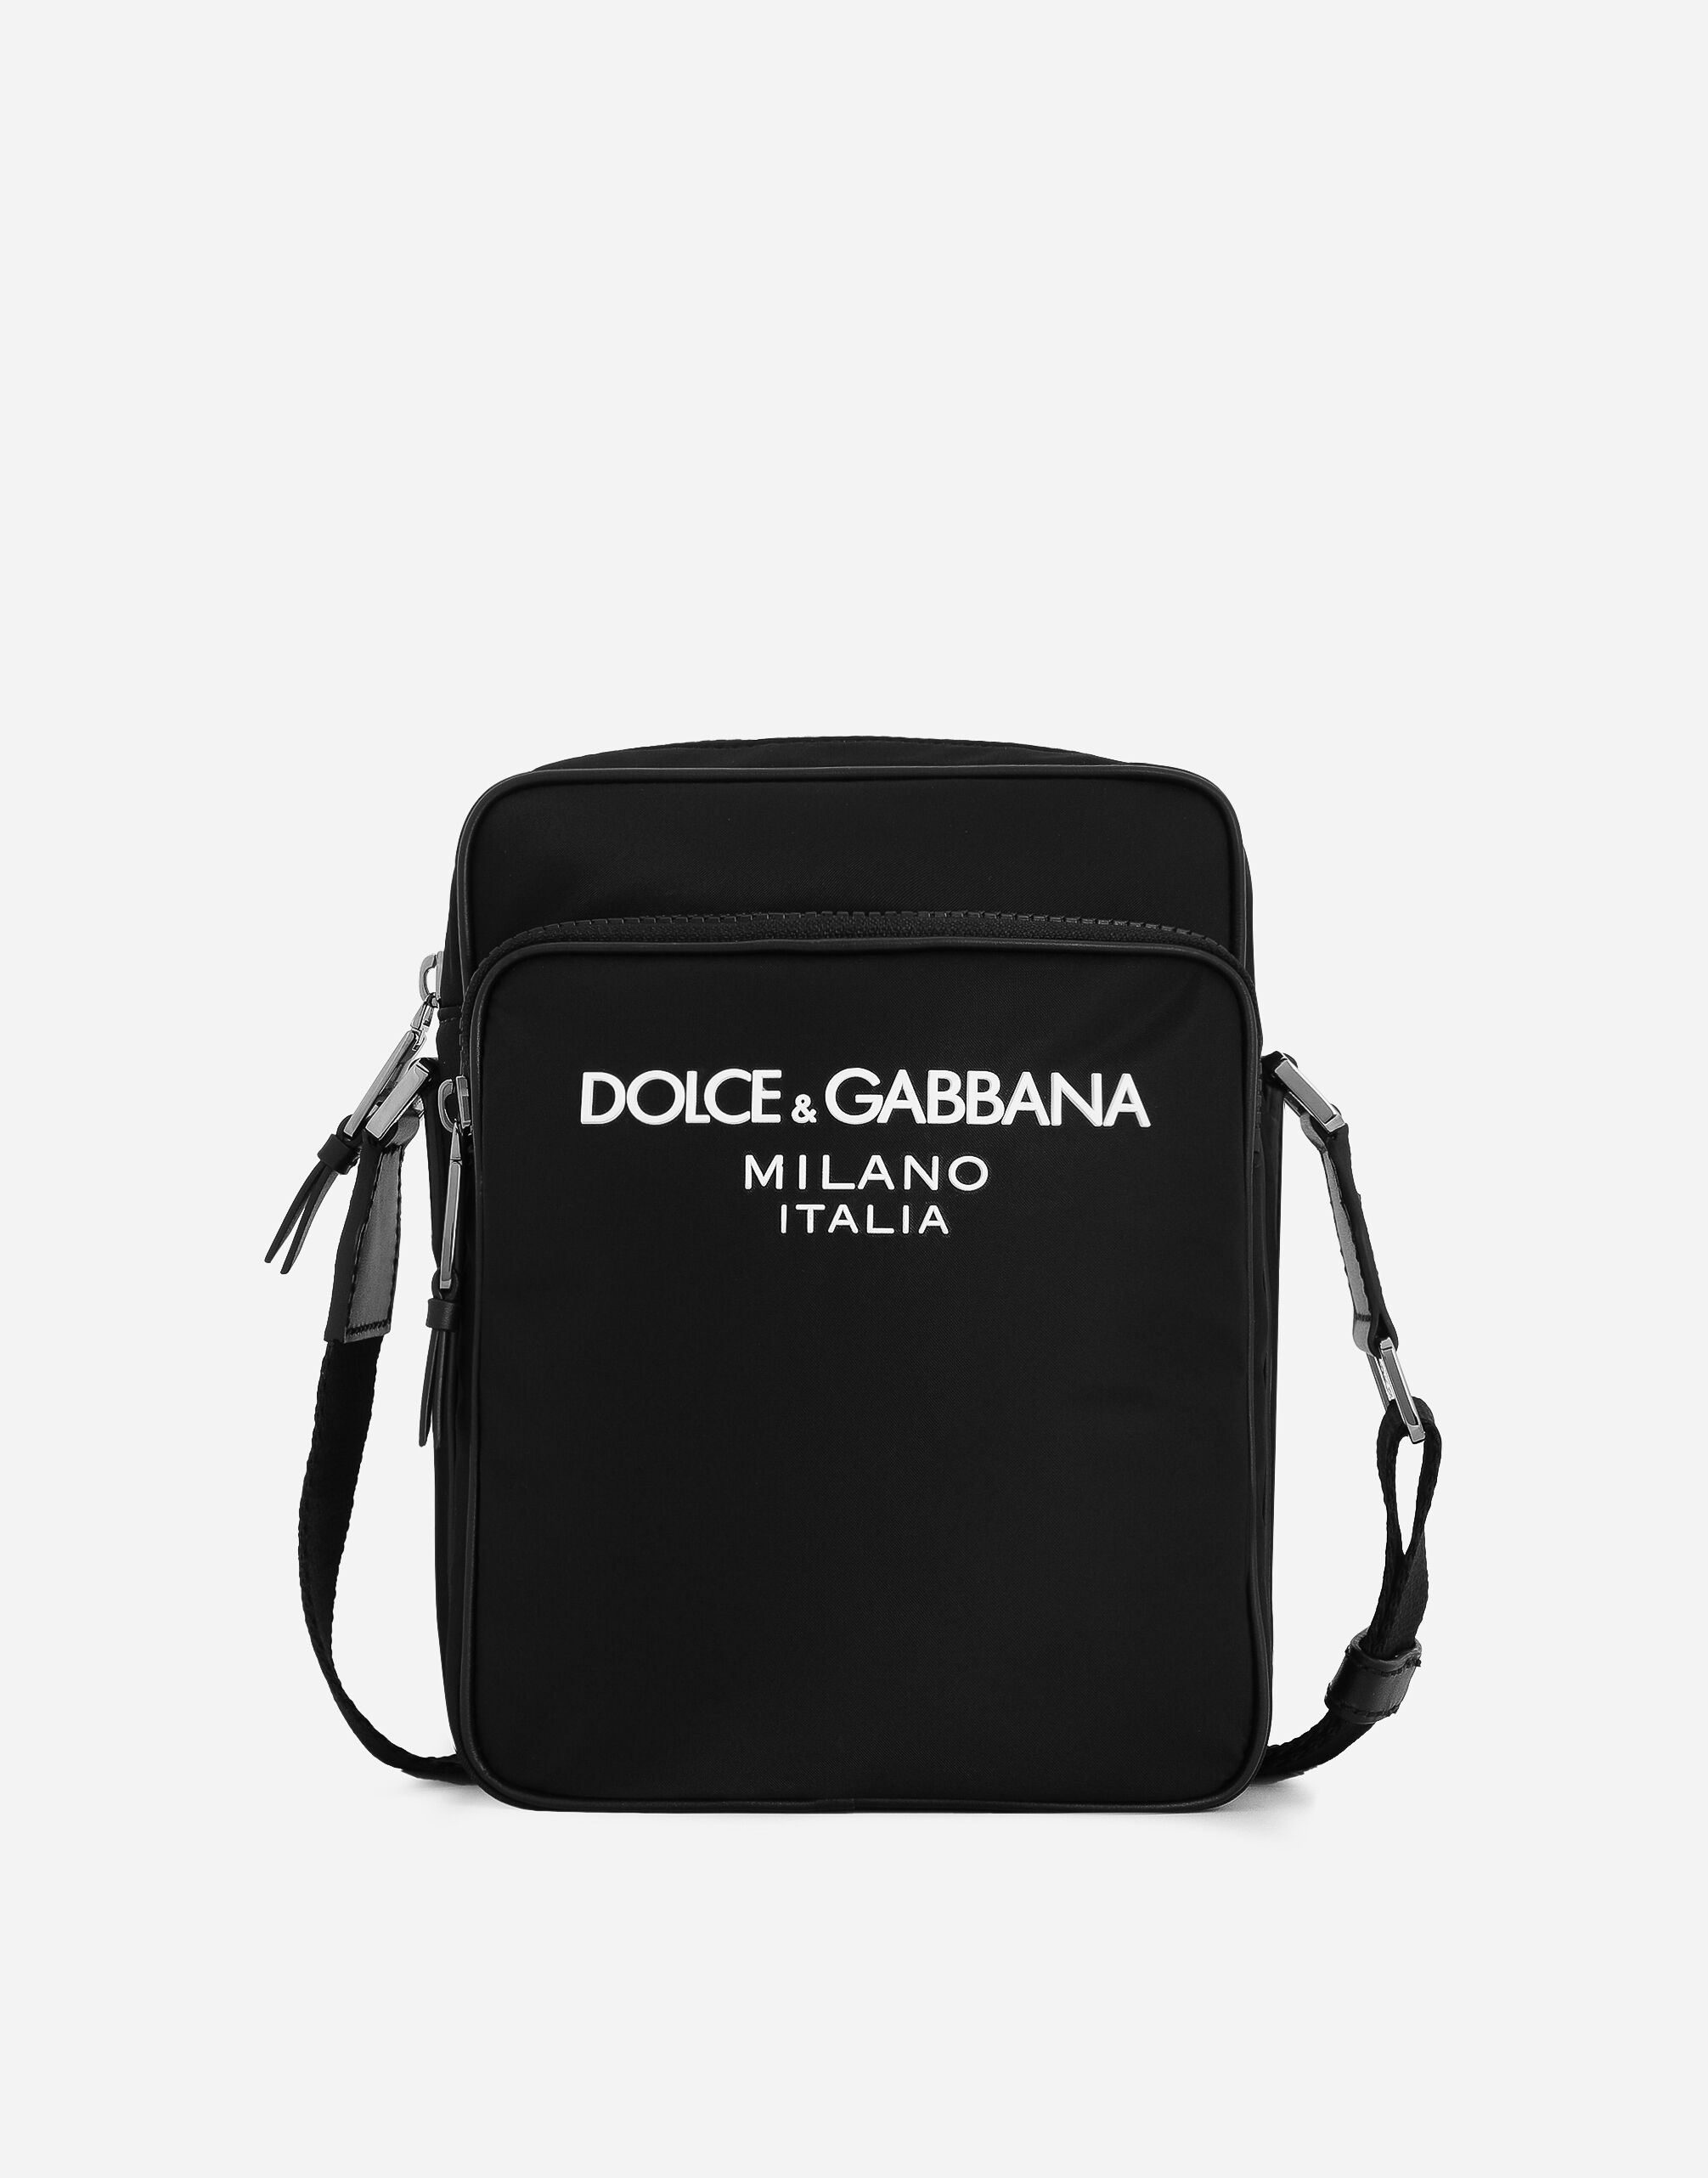 Dolce & Gabbana 나일론 크로스보디백 브라운 BM3004A1275